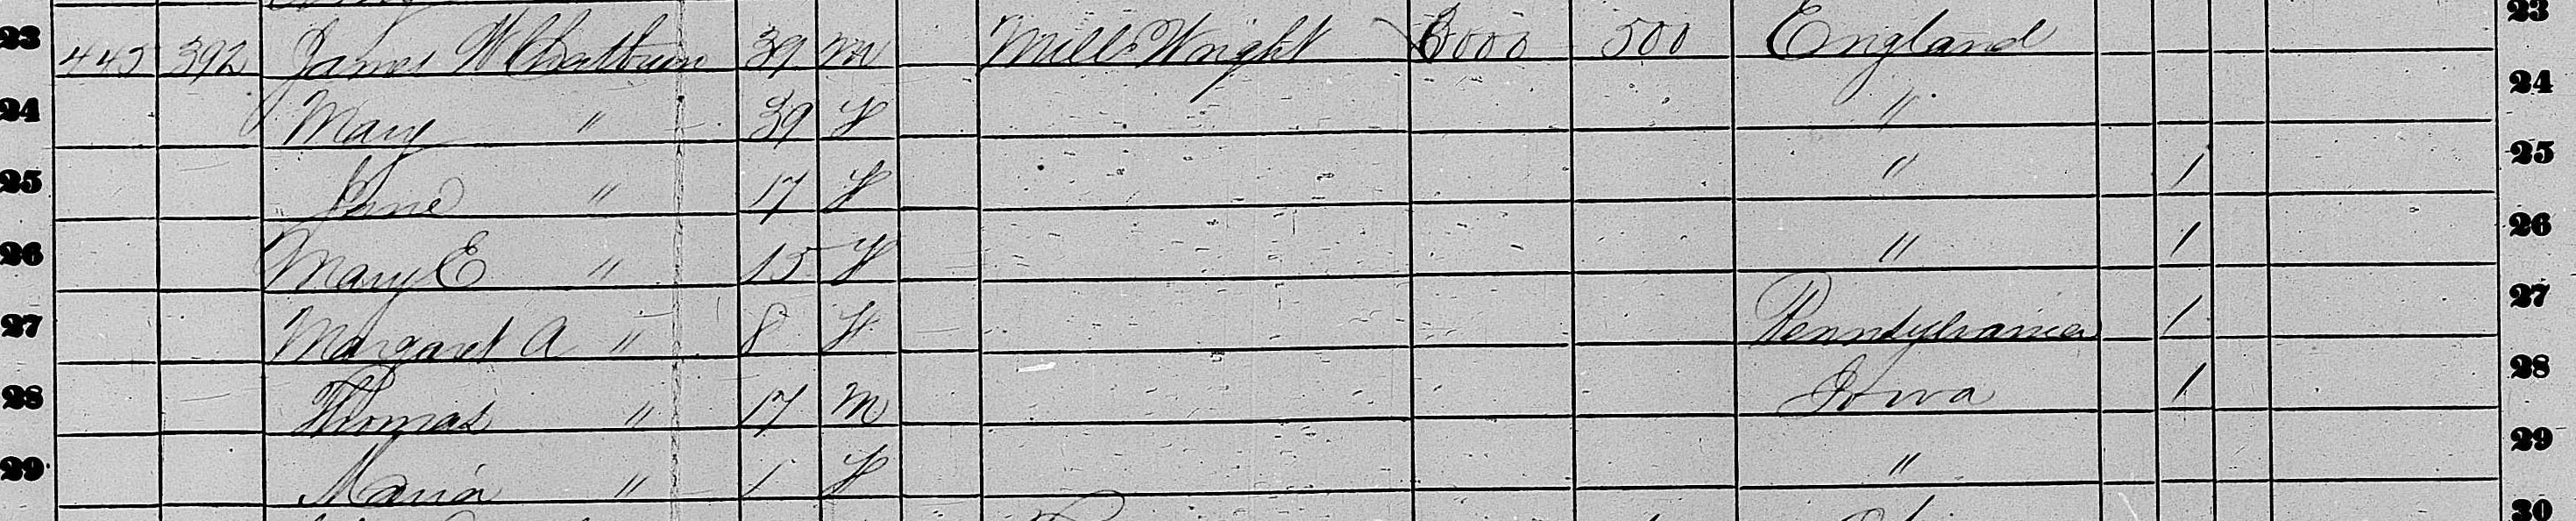 Chatburn Census 1900, Harlan, Shelby Co., Iowa